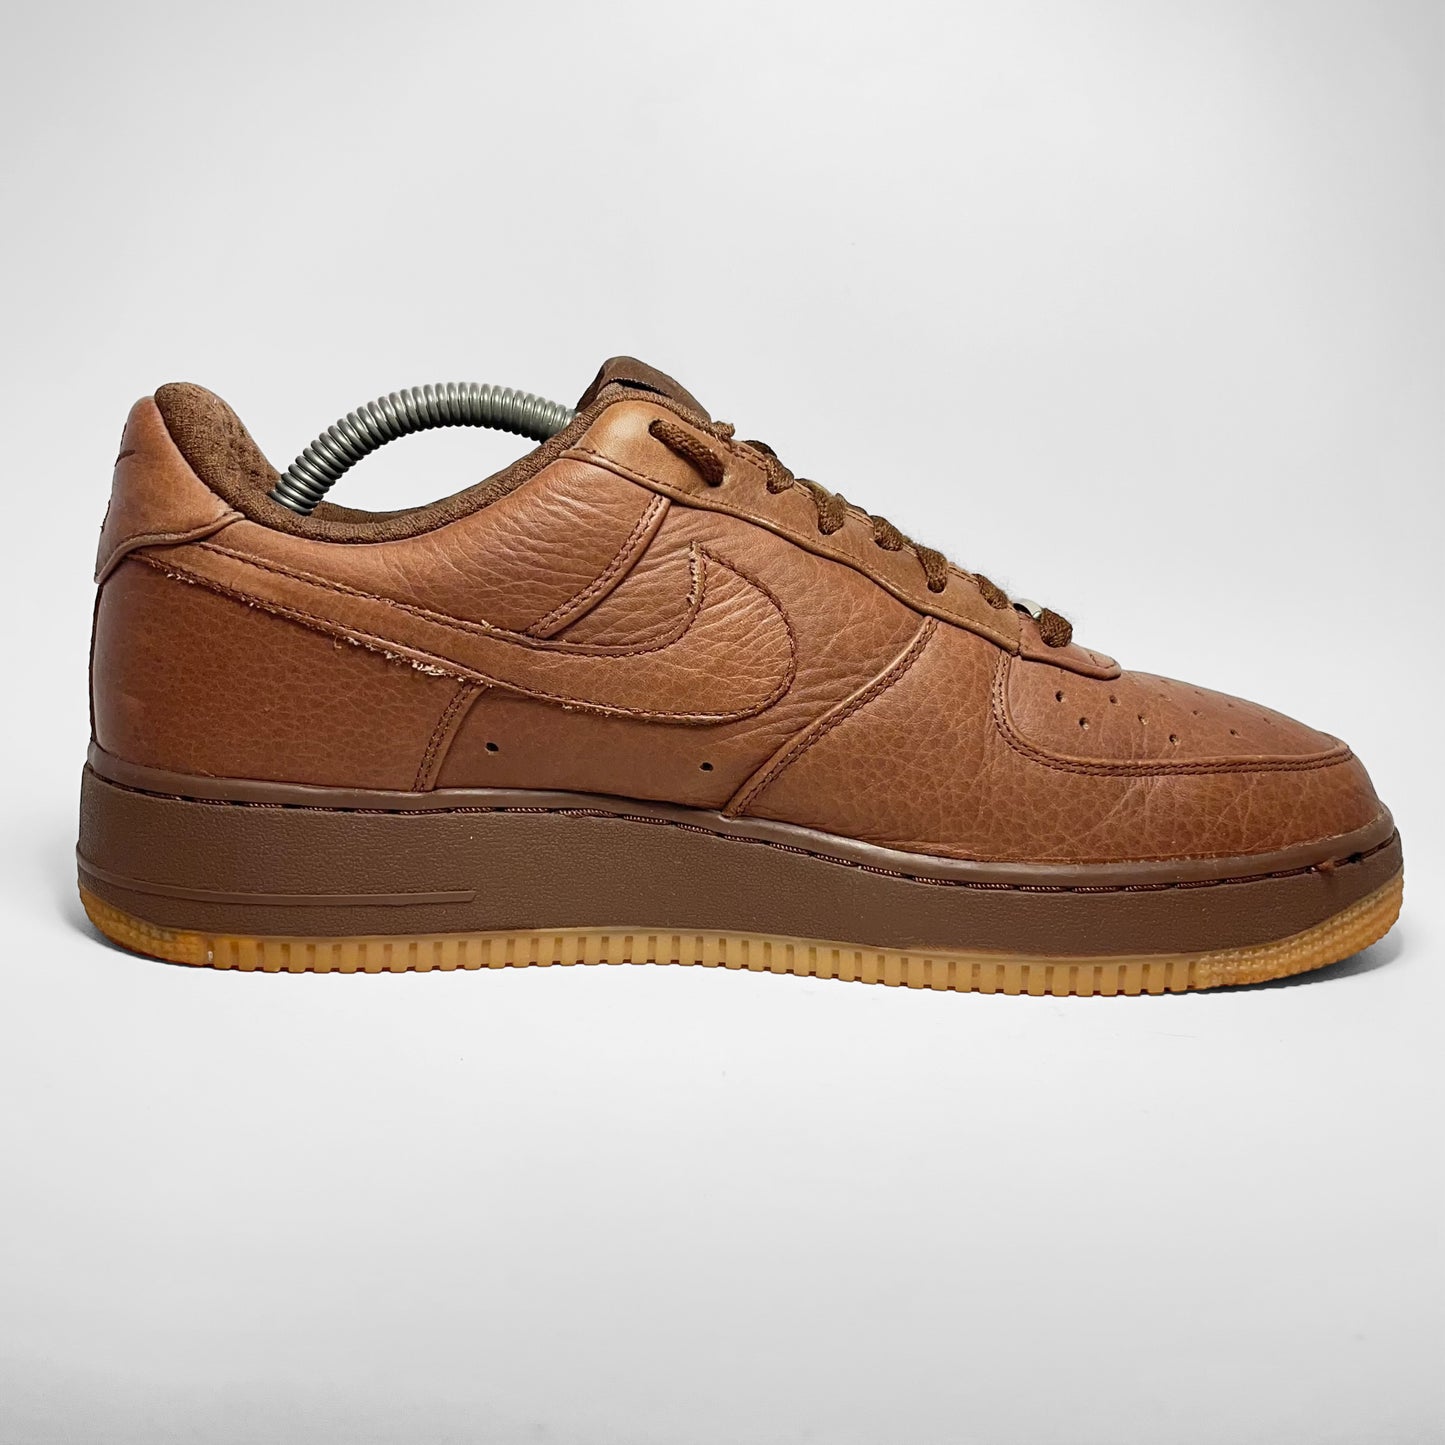 Nike Air Force 1 Premium Leather (2006)